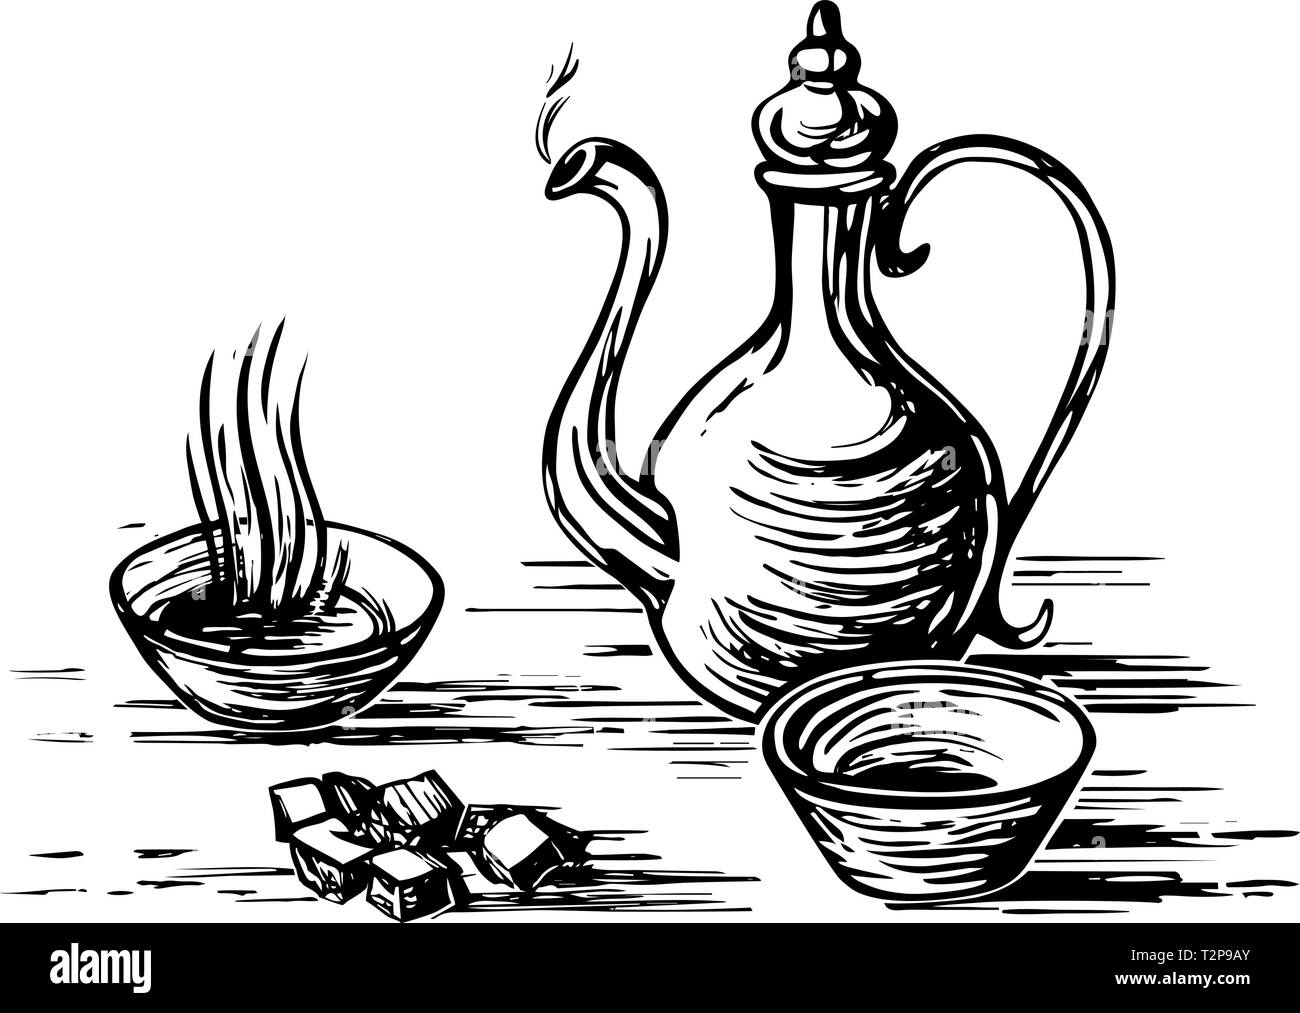 Oriental antique tea set. Teapot, cups bowls, sugar lumps. Imitation of engraving. Scratch board style imitation. Hand drawn sketch image. Stock Vector